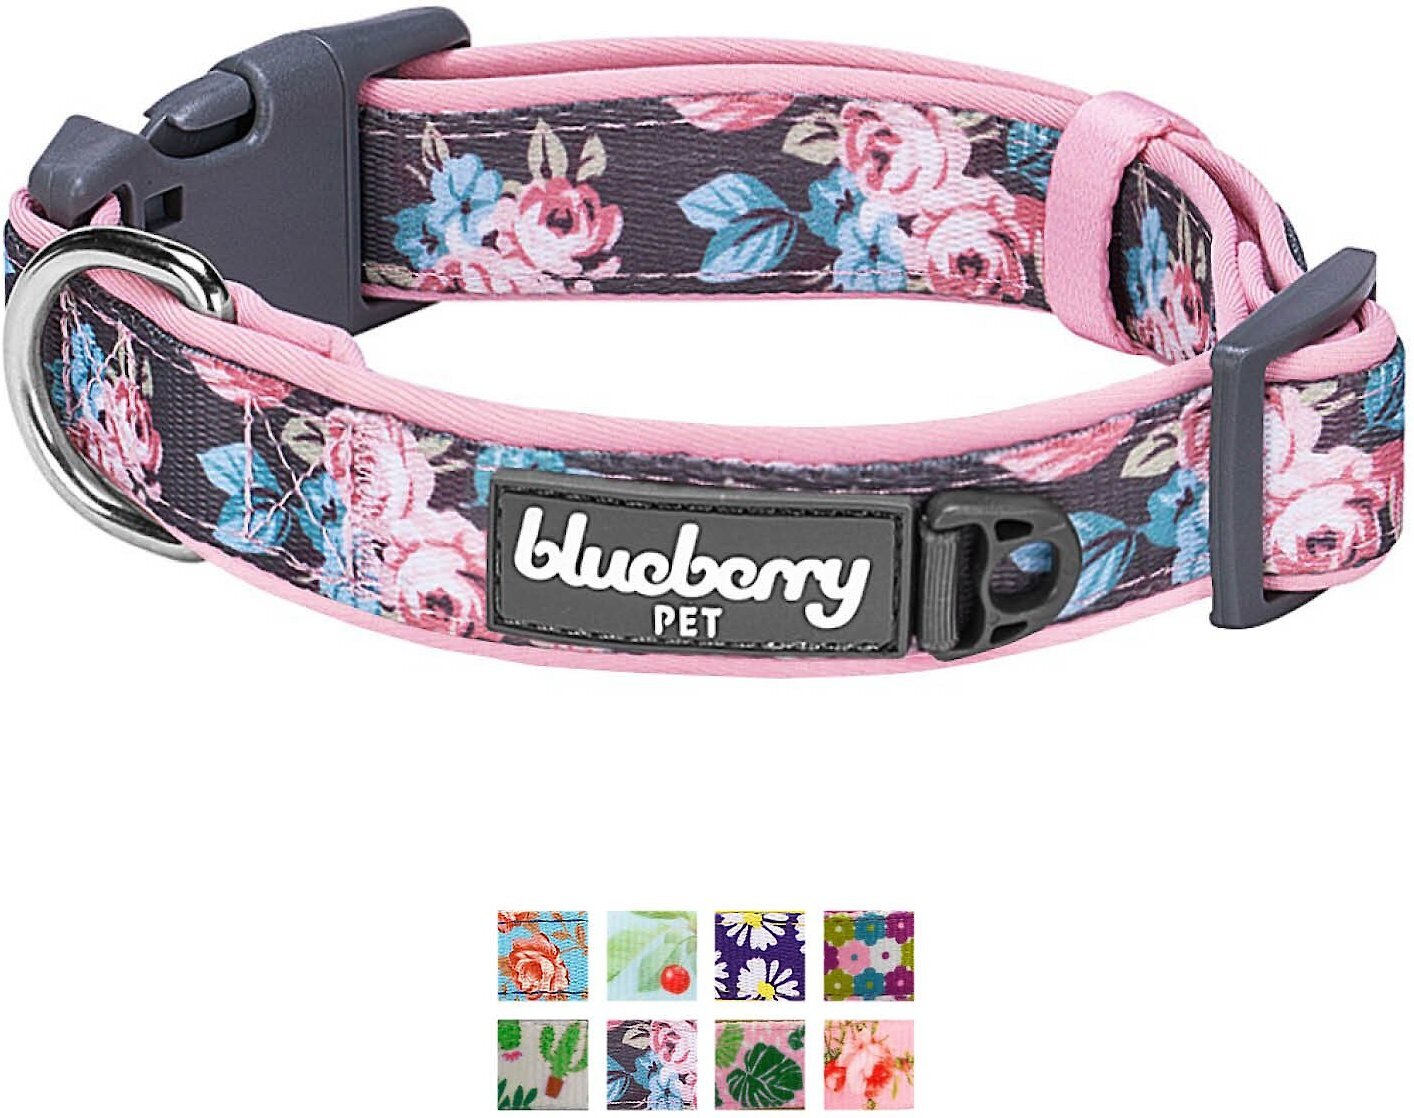 pink burberry dog collar